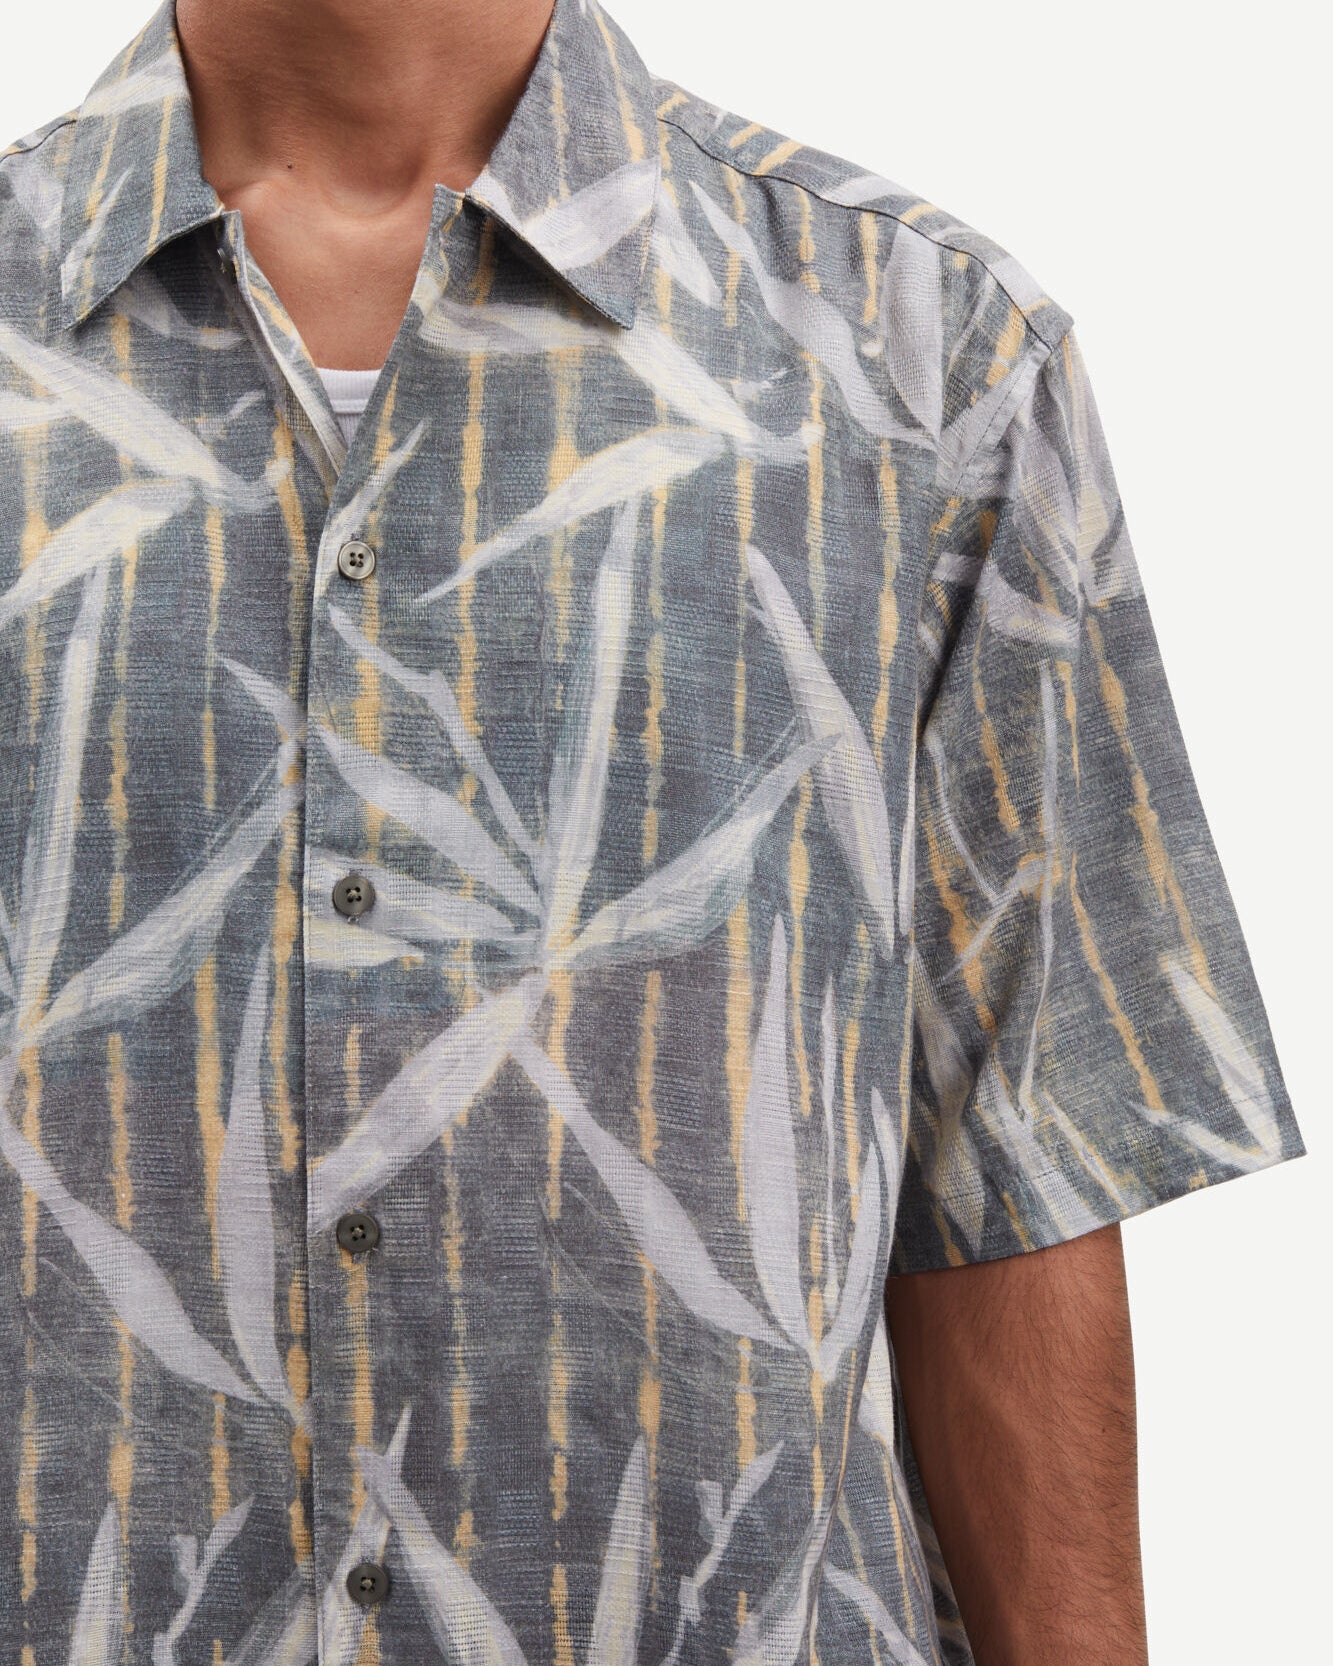 Saayo X 15142 Shirt - Blurred Palms